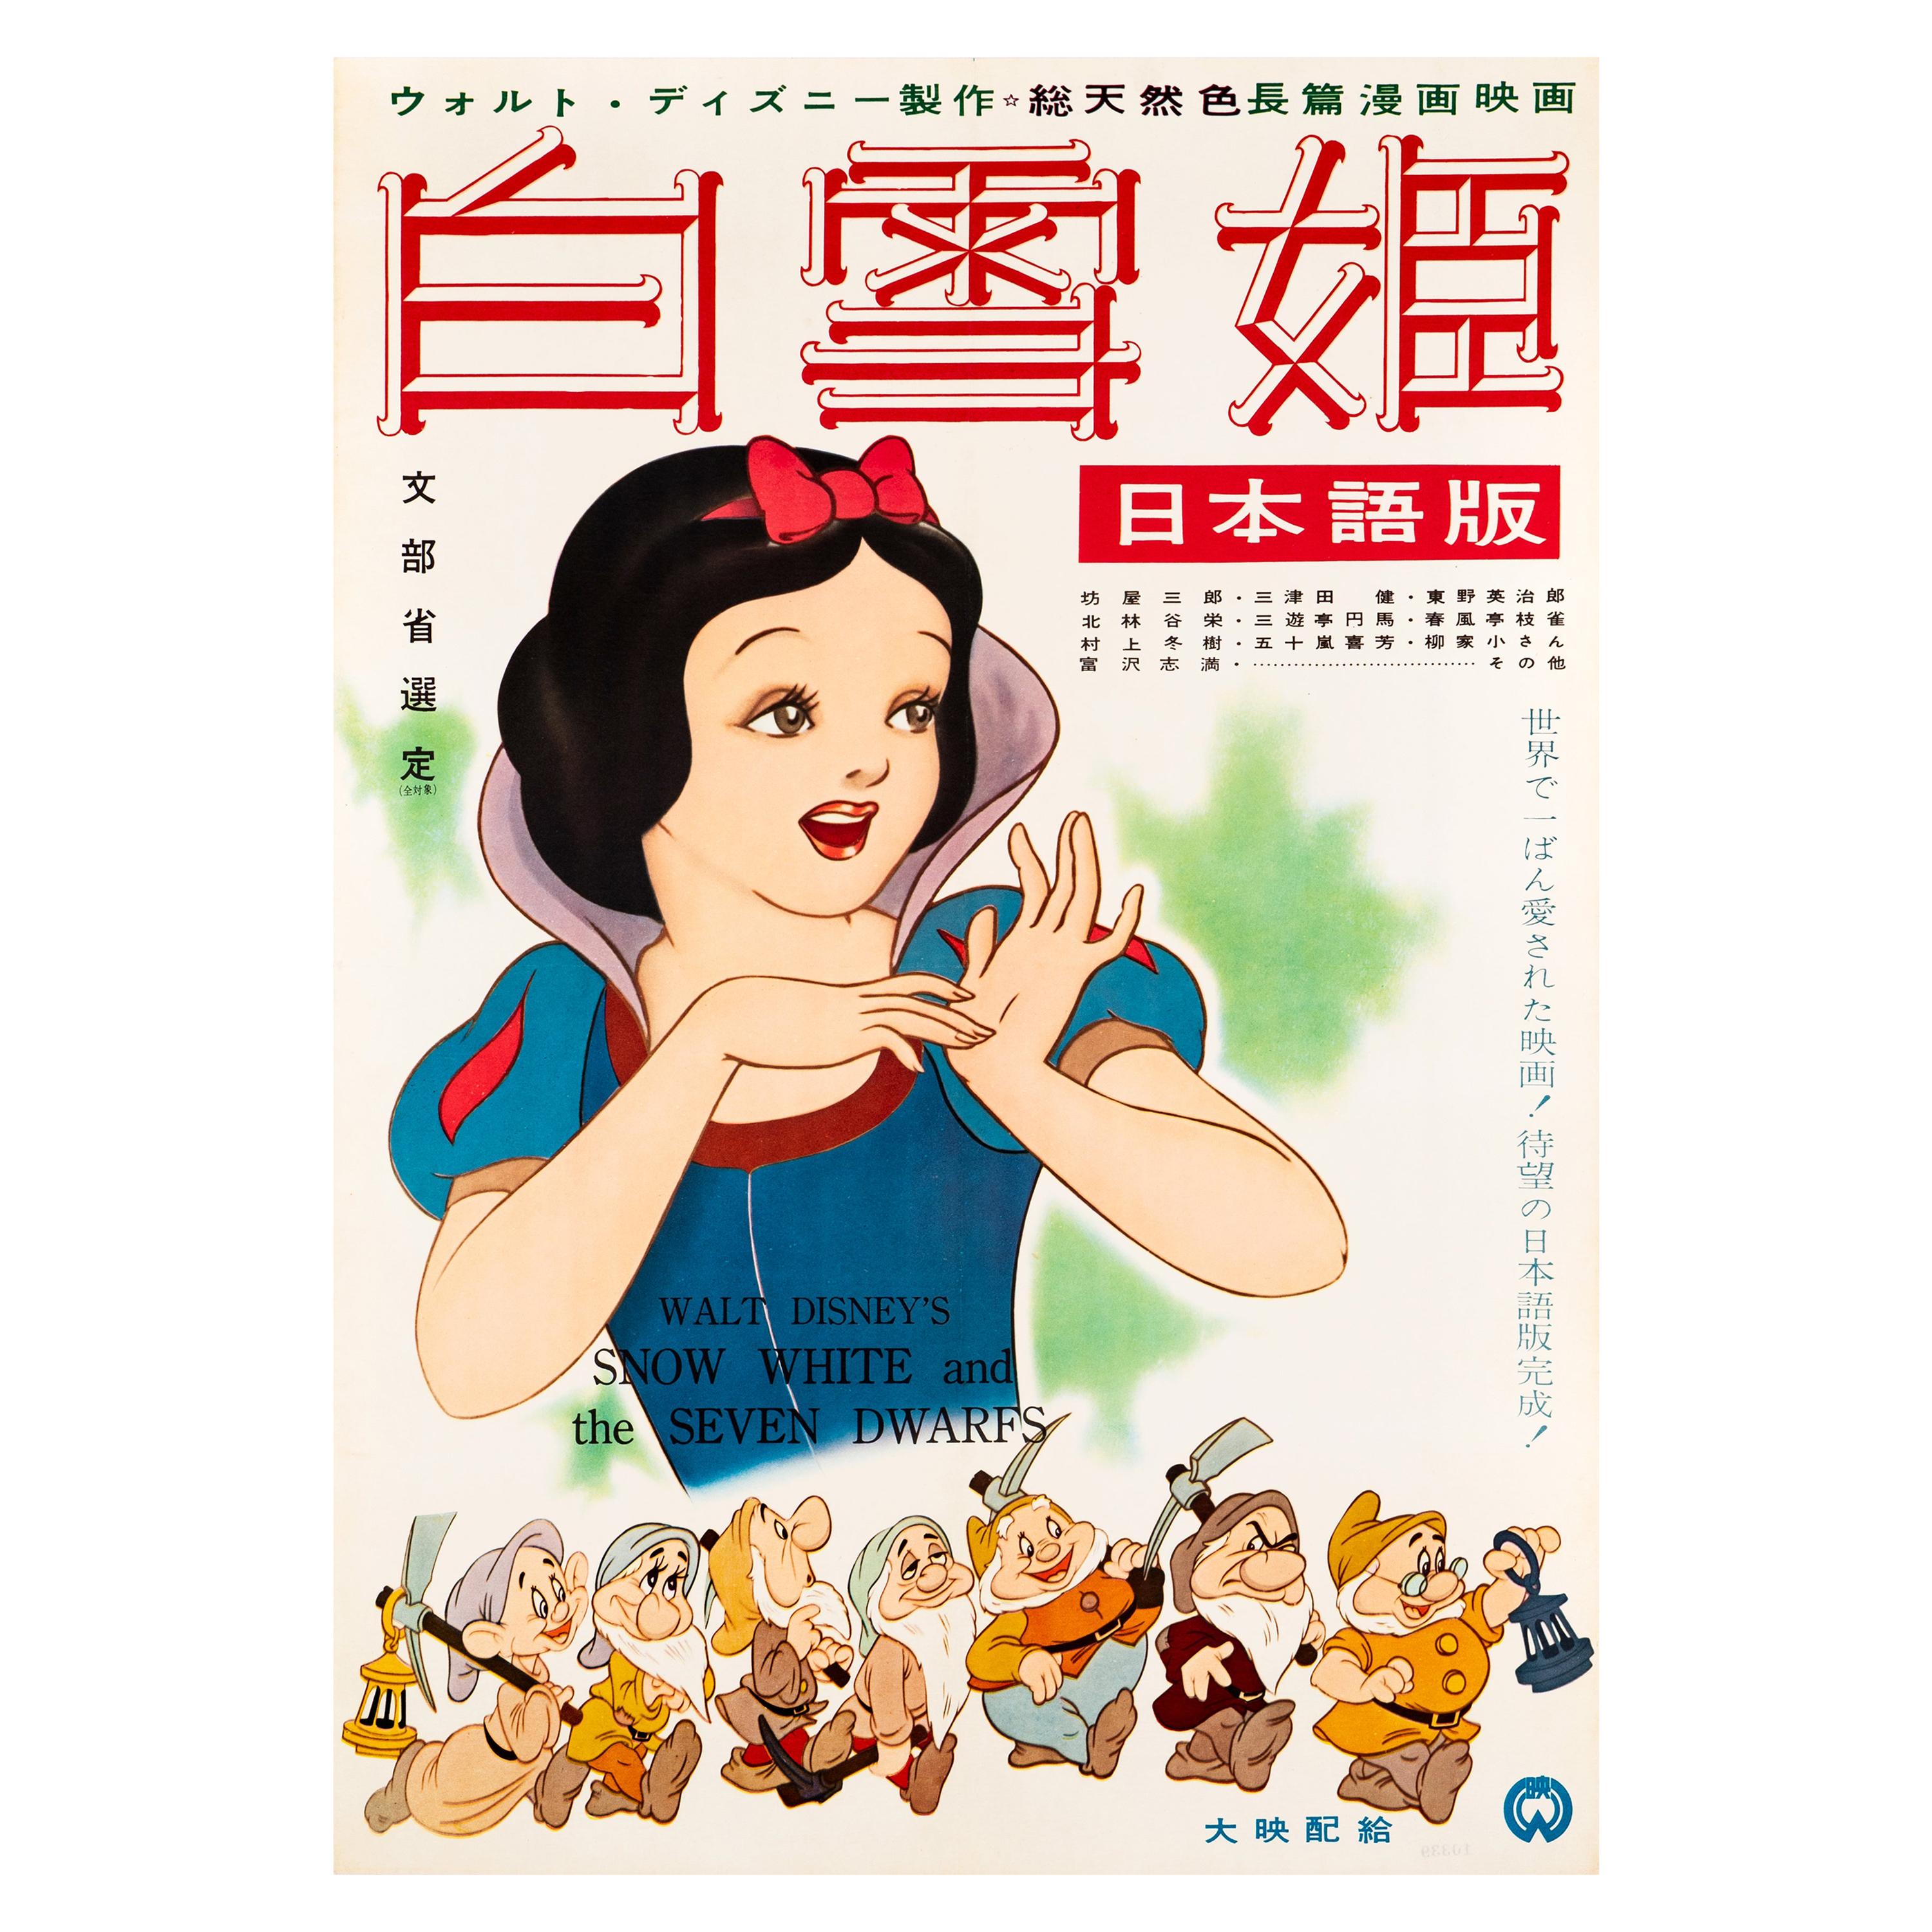 'Snow White and the Seven Dwarfs' Original Vintage Movie Poster, Japanese, 1950s